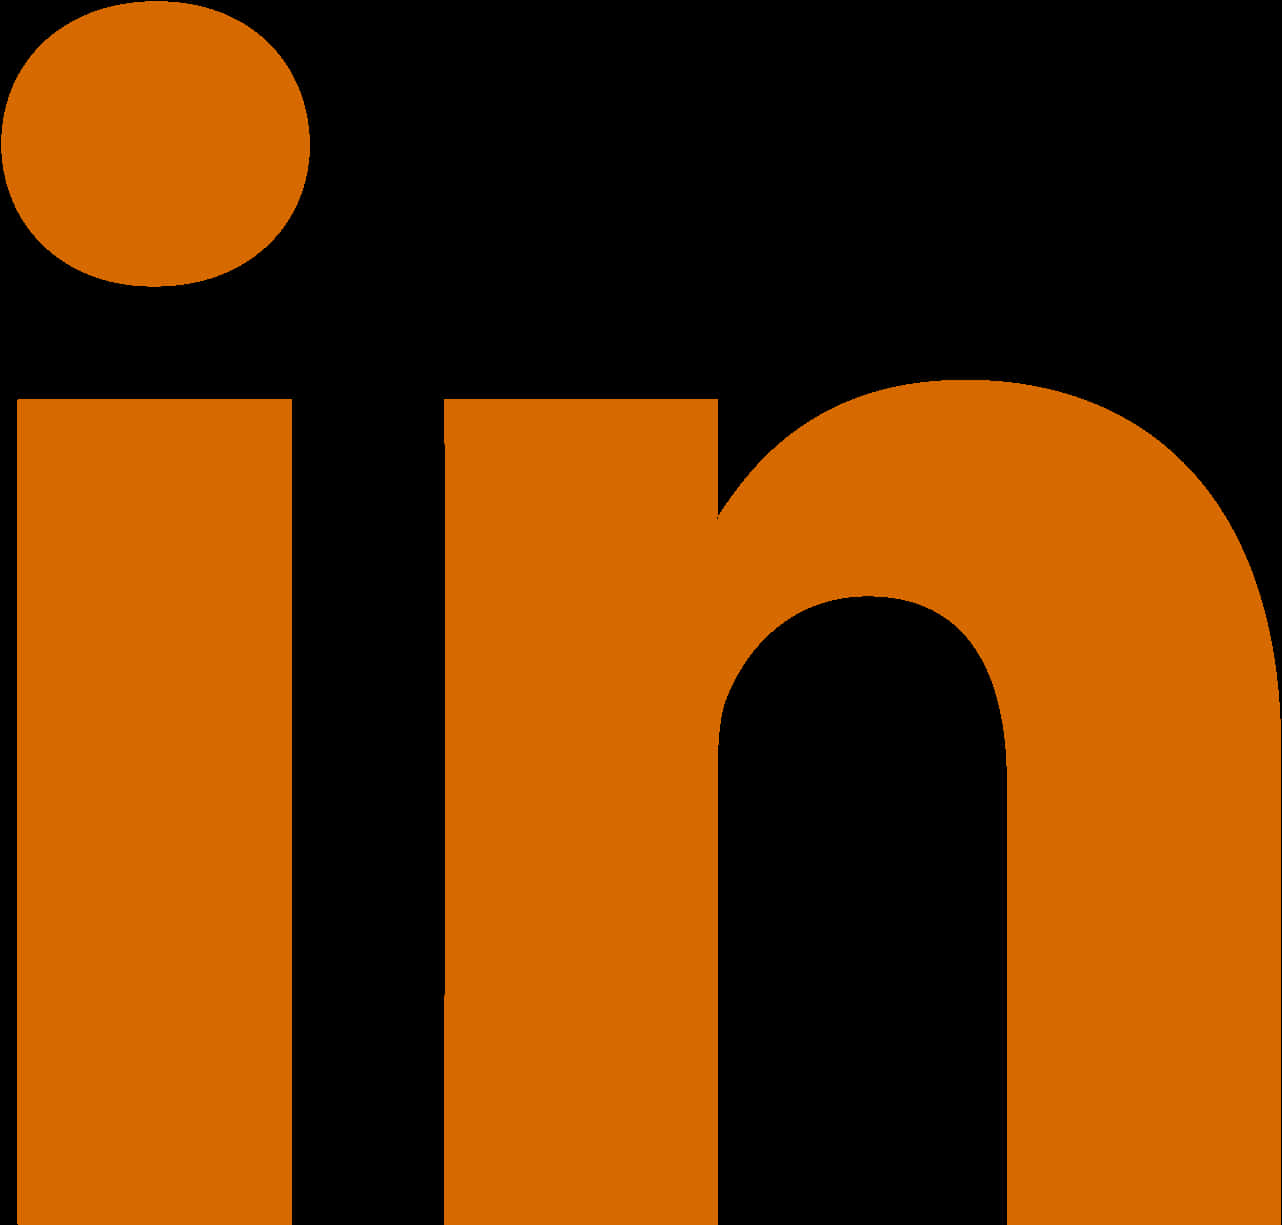 Linked In Logo Orange Background